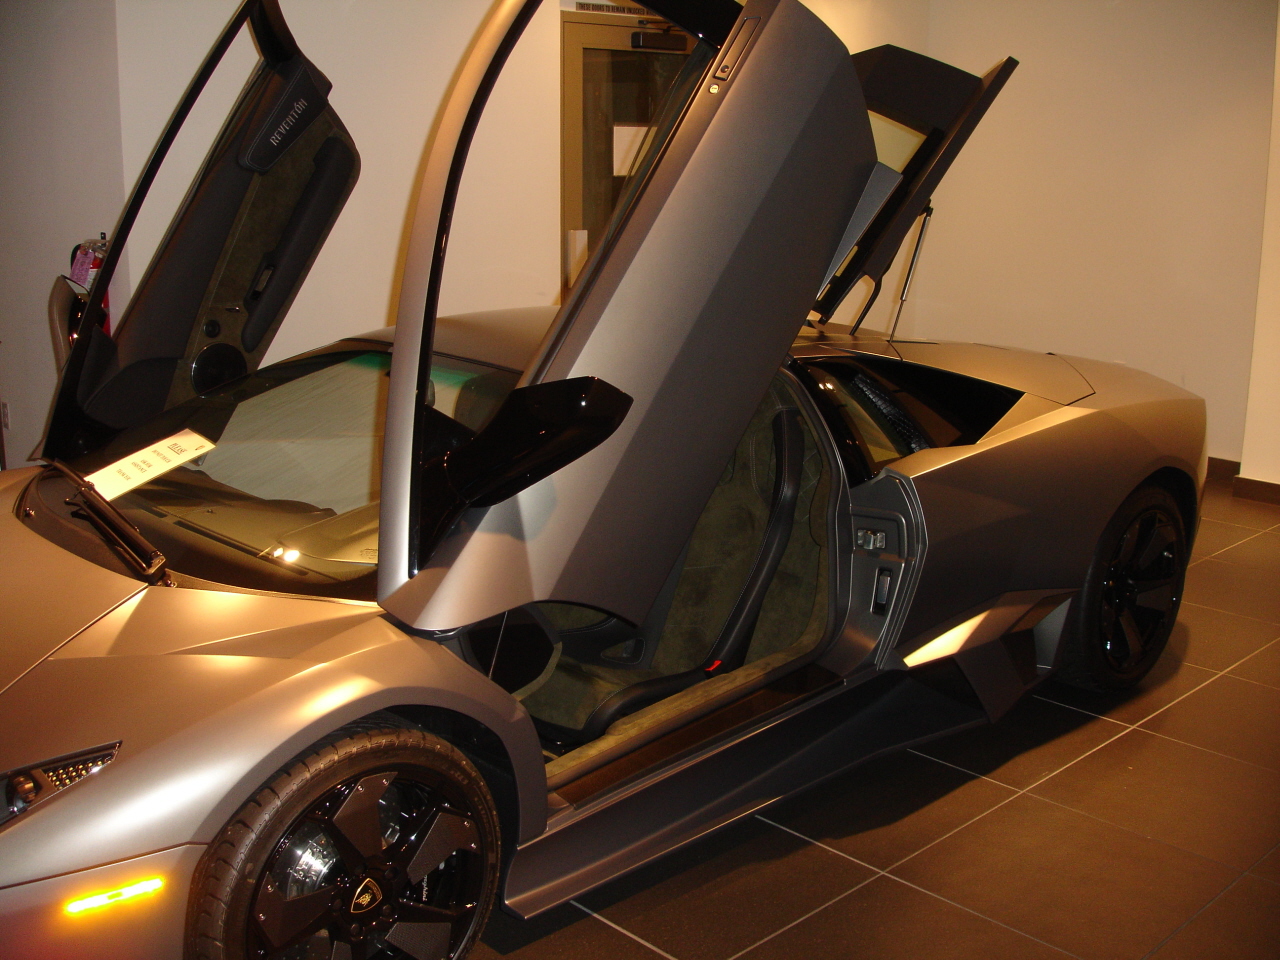 Visita al Museo Lamborghini Las Vegas/ Visit to Lamborghini Museum LasVegas-Lamborghini04.JPG